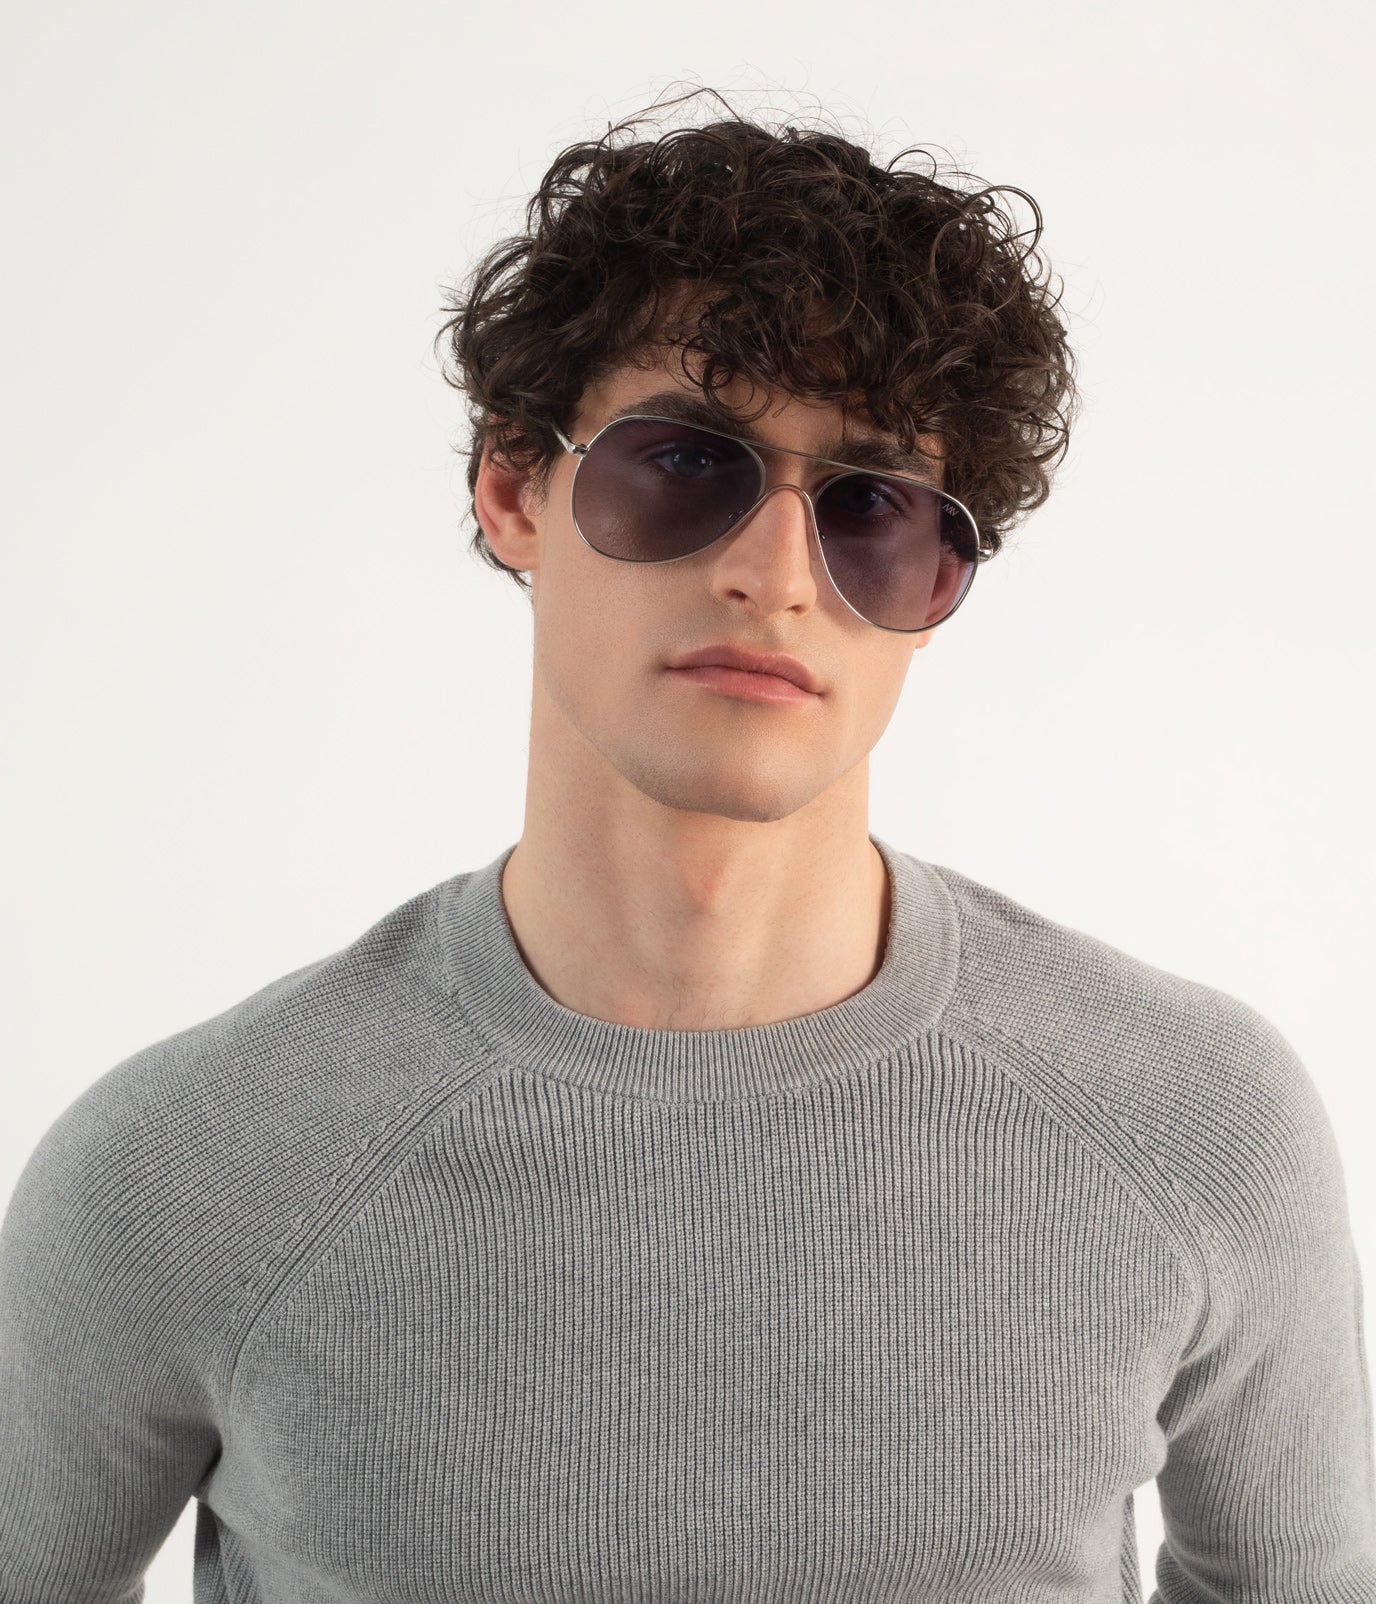 KAI Aviator Sunglasses | Color: Grey - variant::silver